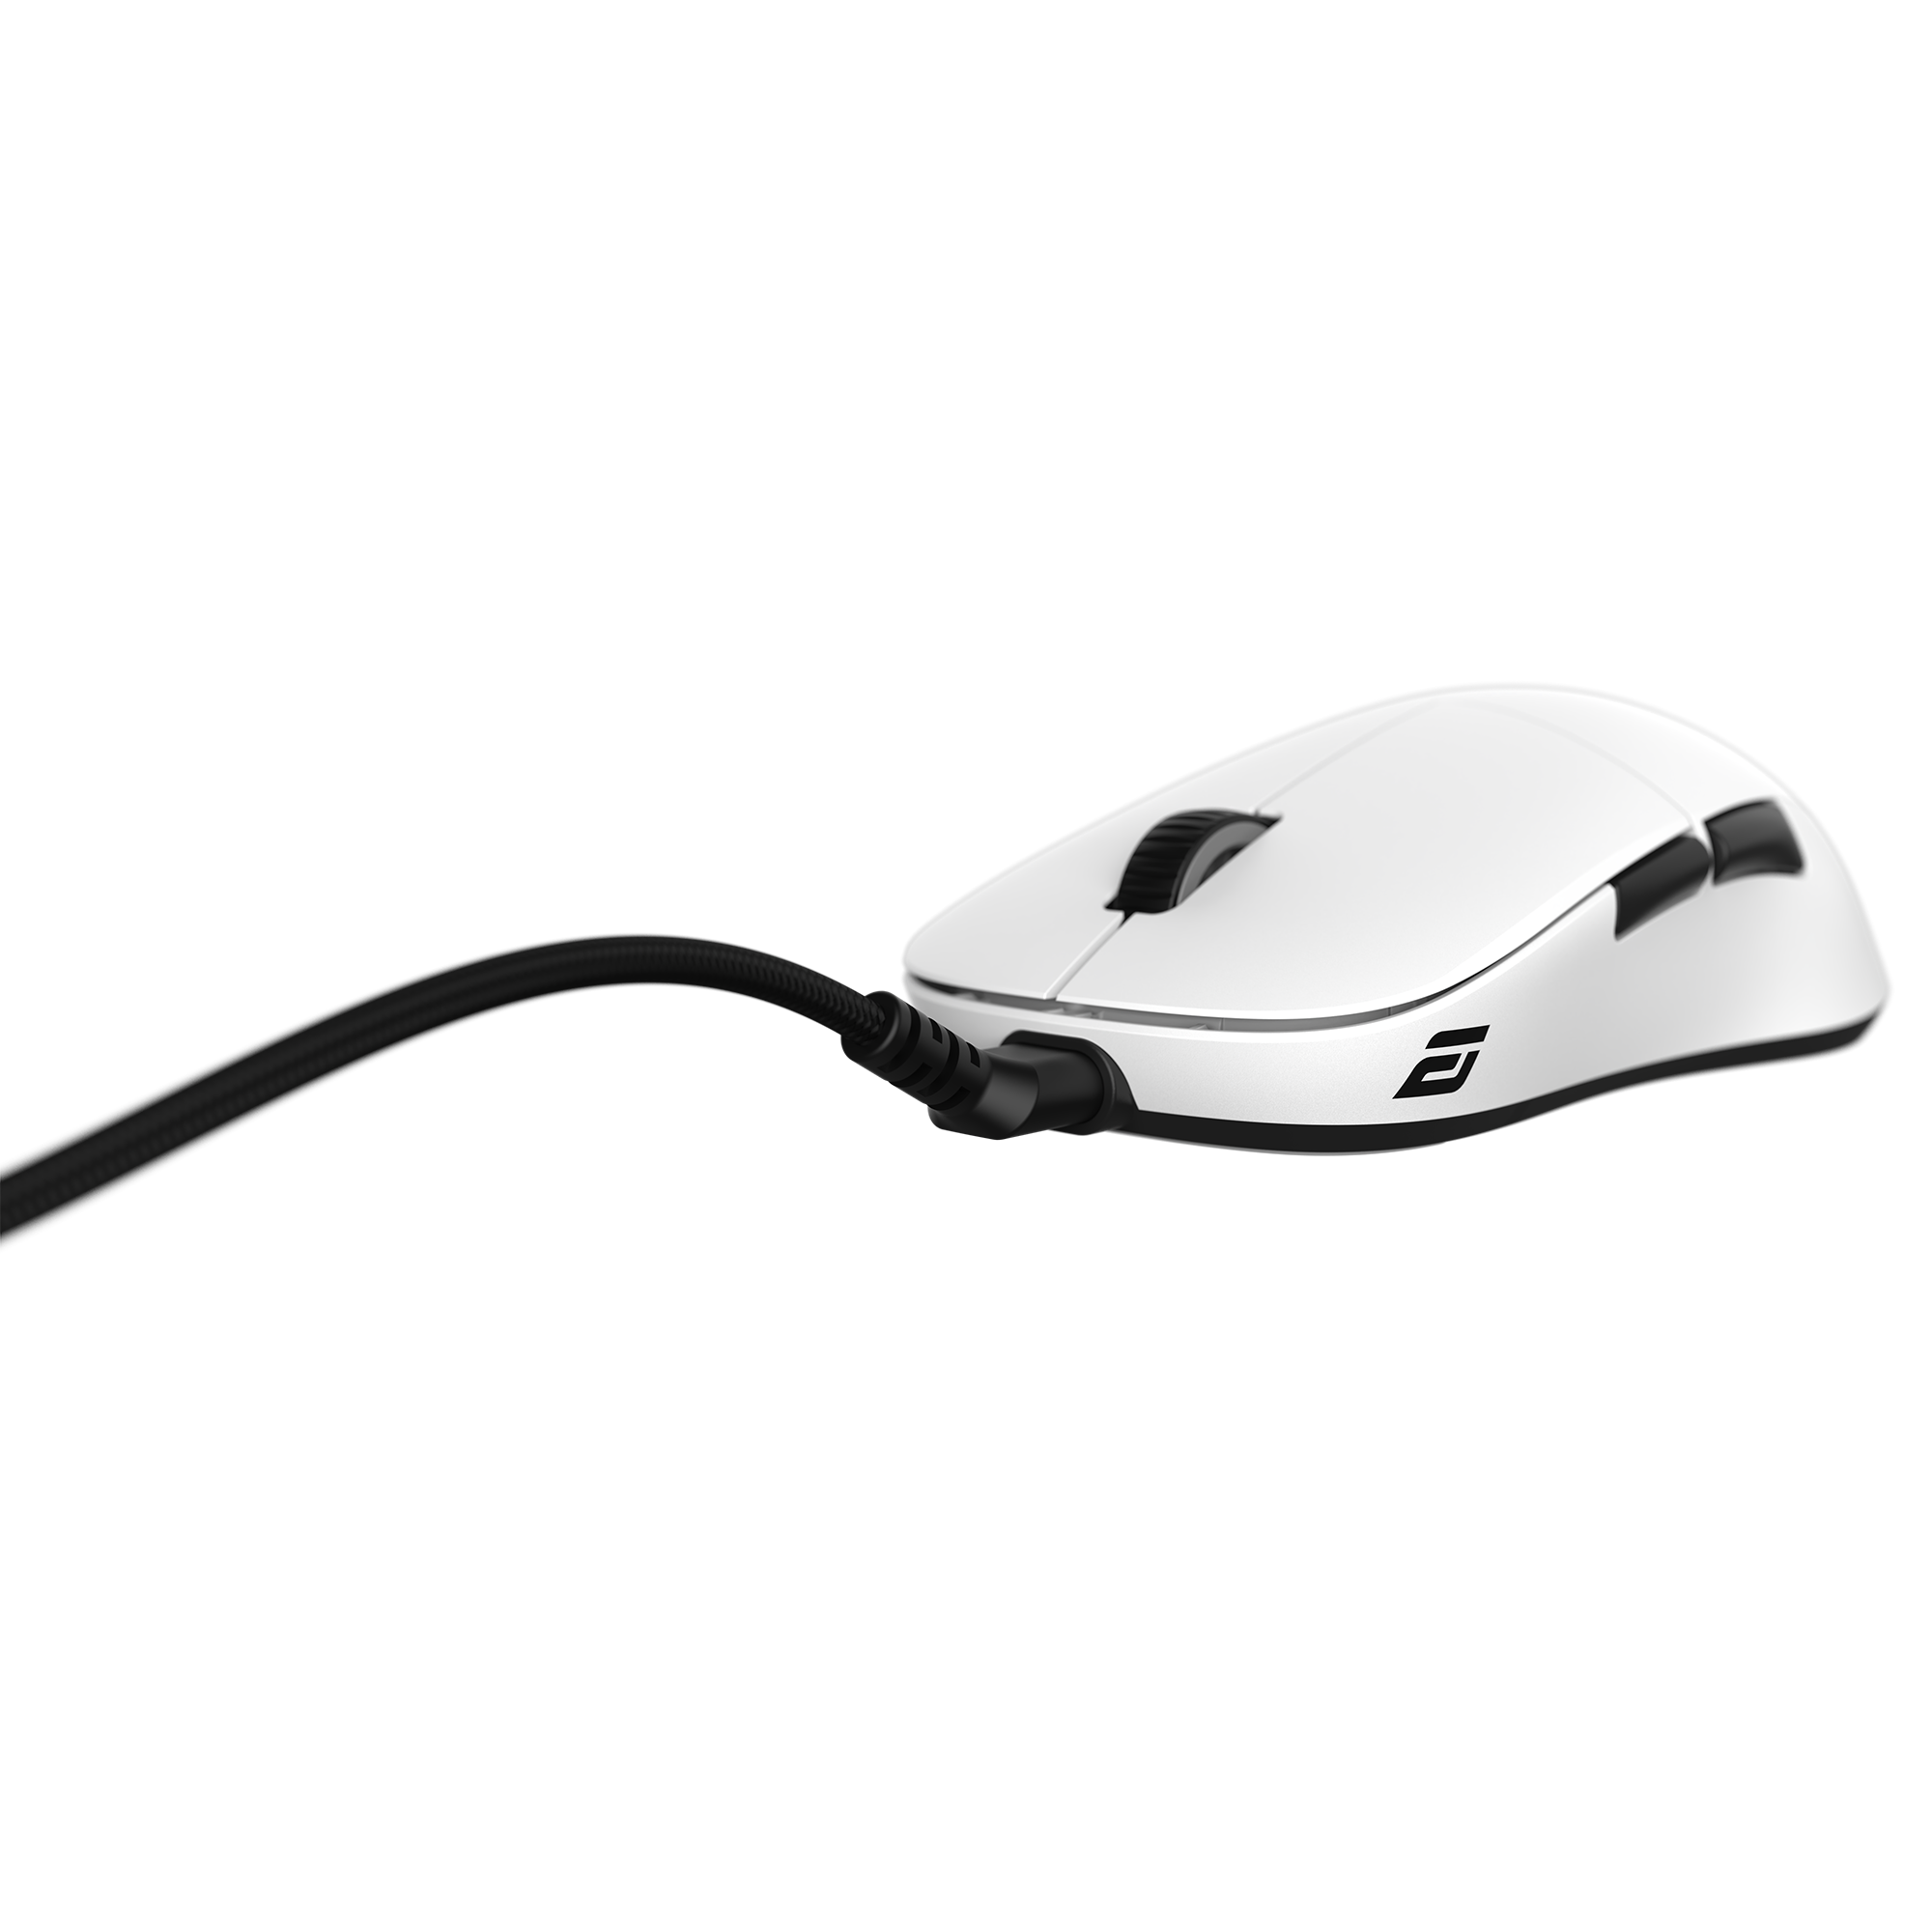 Endgame Gear - Endgame Gear XM2WE Wireless Optical Lightweight Gaming Mouse - White (EGG-XM2WE-WHT)